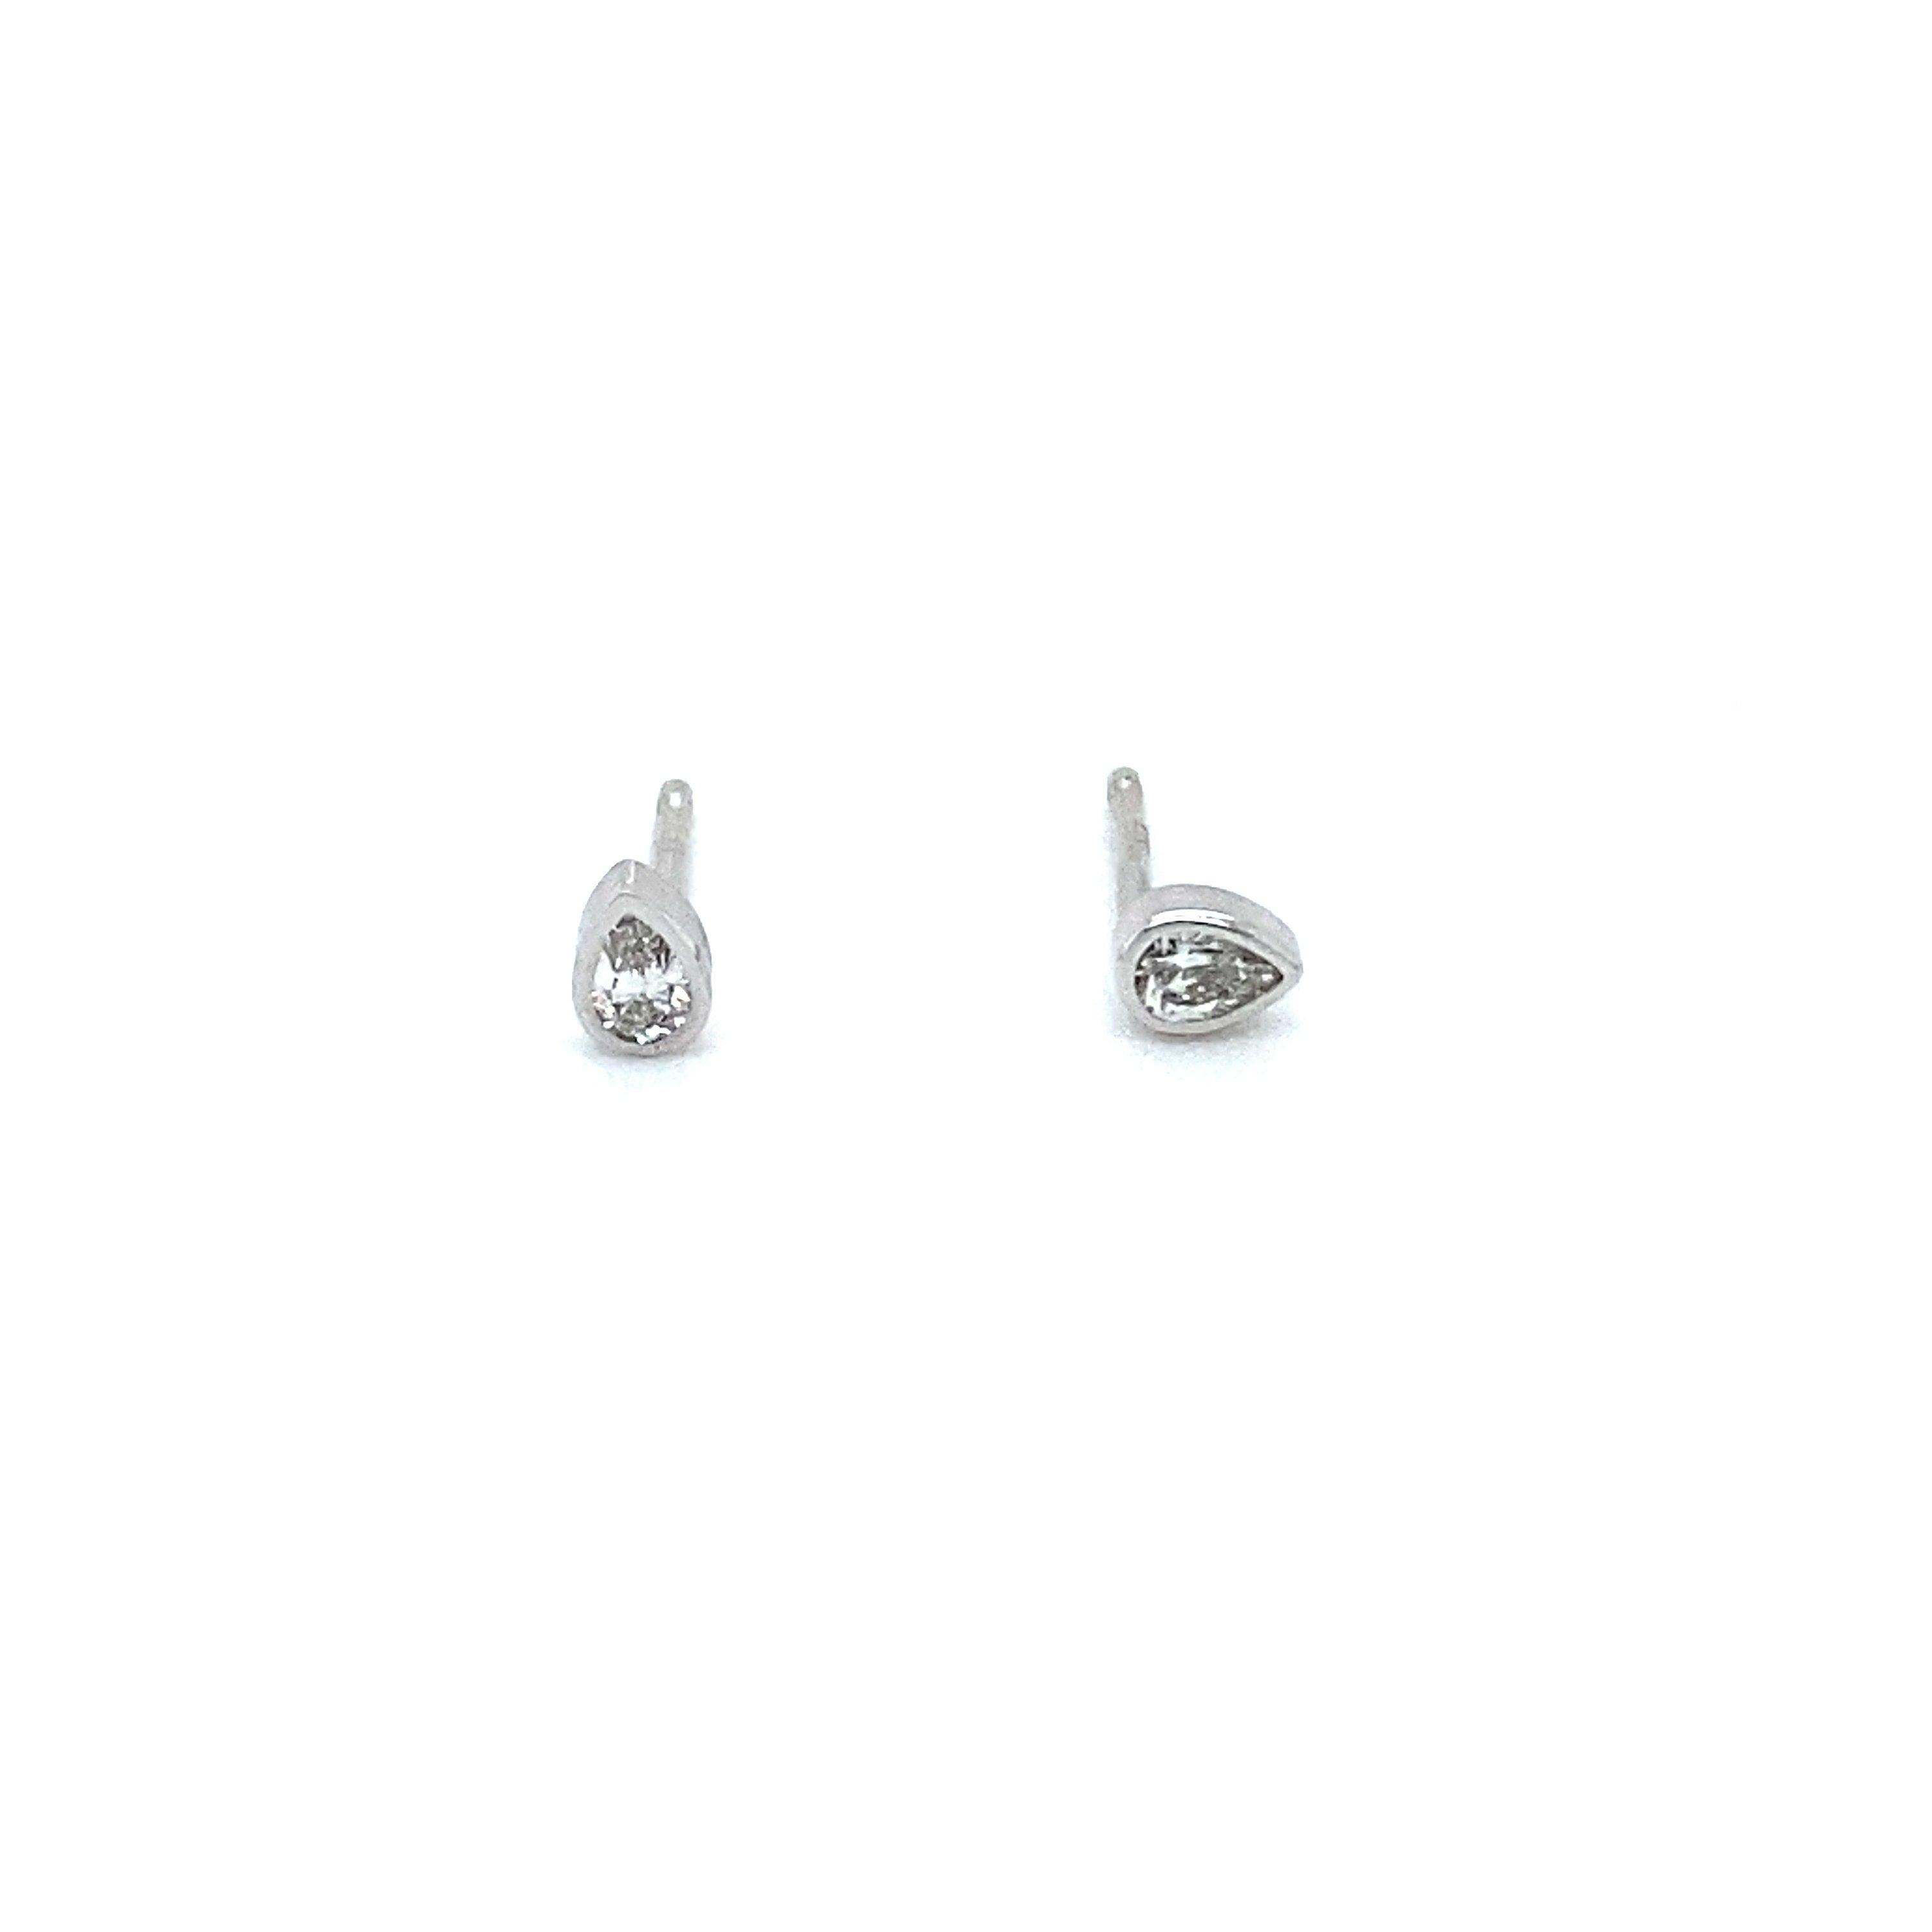 Pear Cut Diamond Stud Earrings in Solid 14K White Gold, Bezel Set, Small, Natural Diamond.